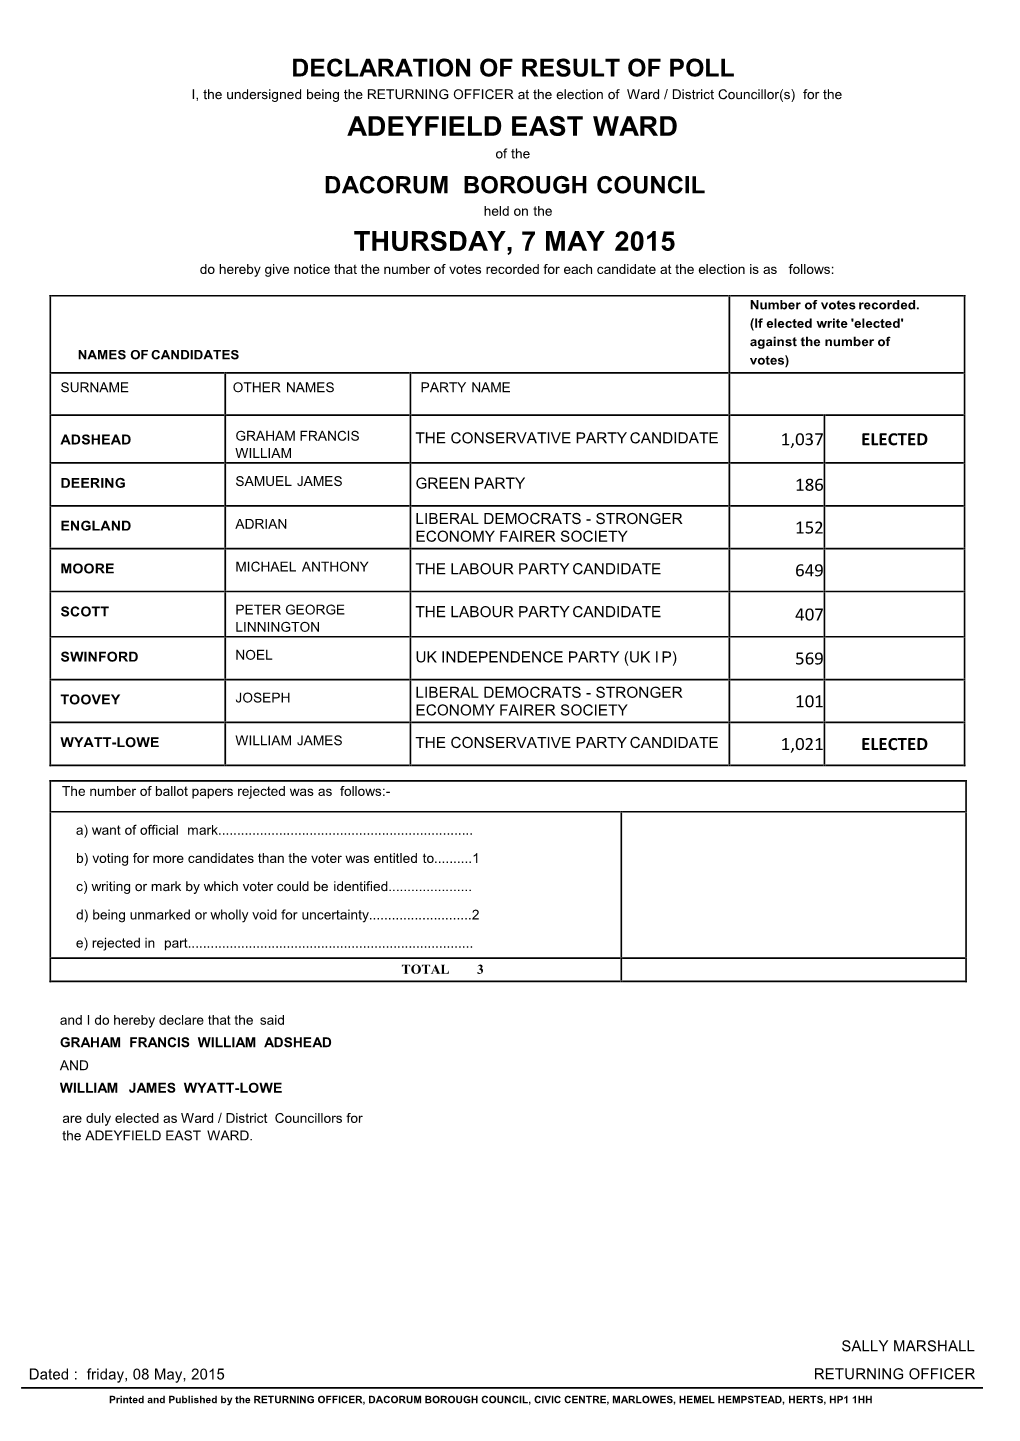 Adeyfield East Ward Thursday, 7 May 2015